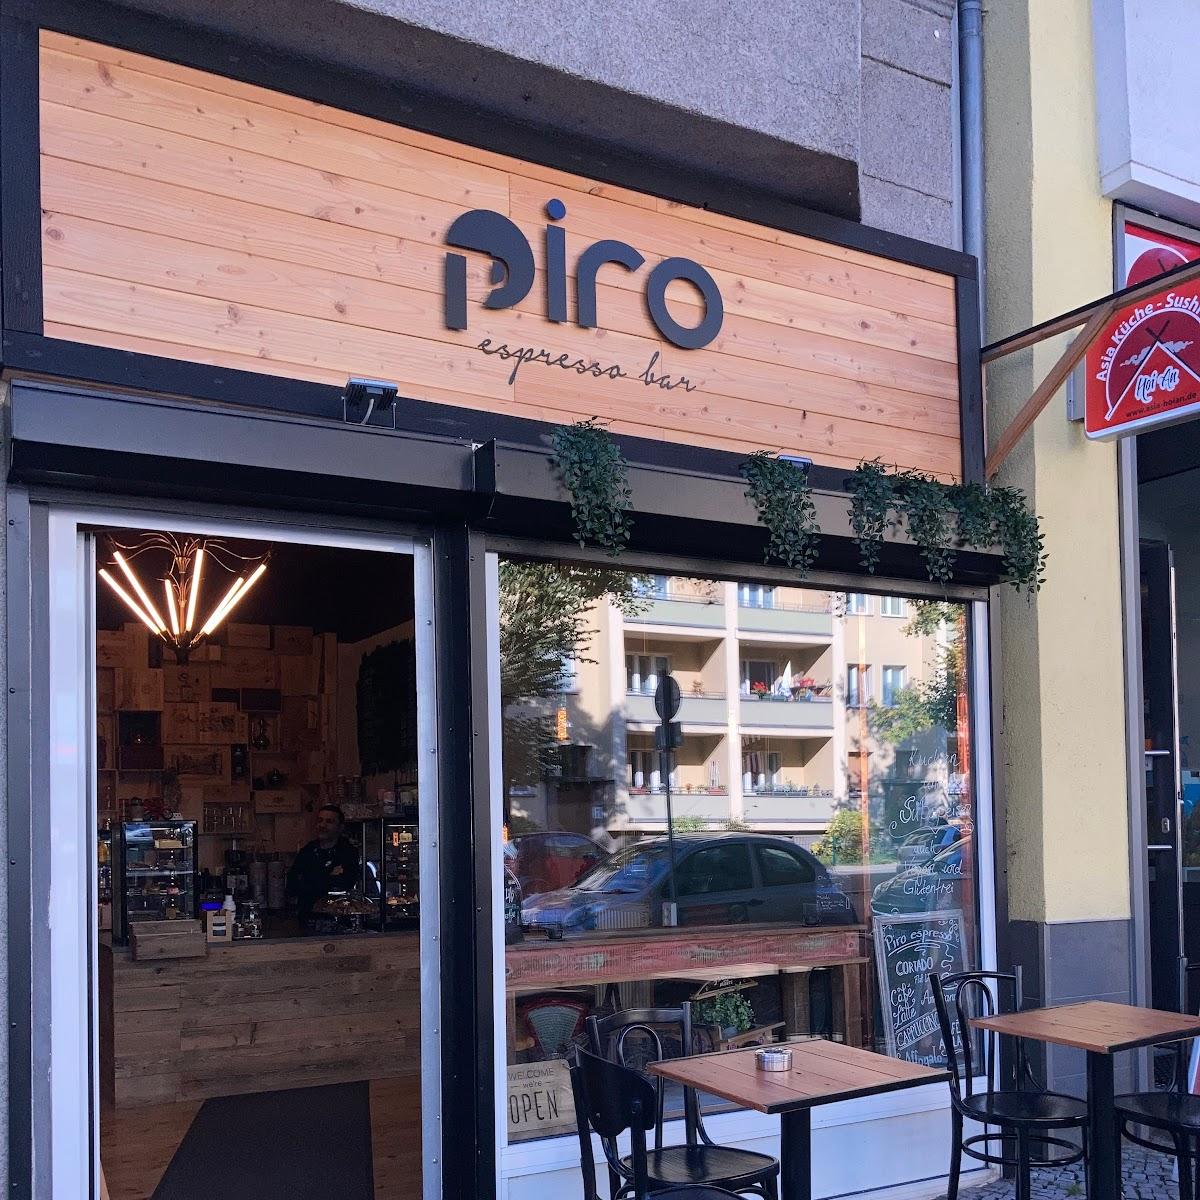 Restaurant "piro espressobar" in Berlin